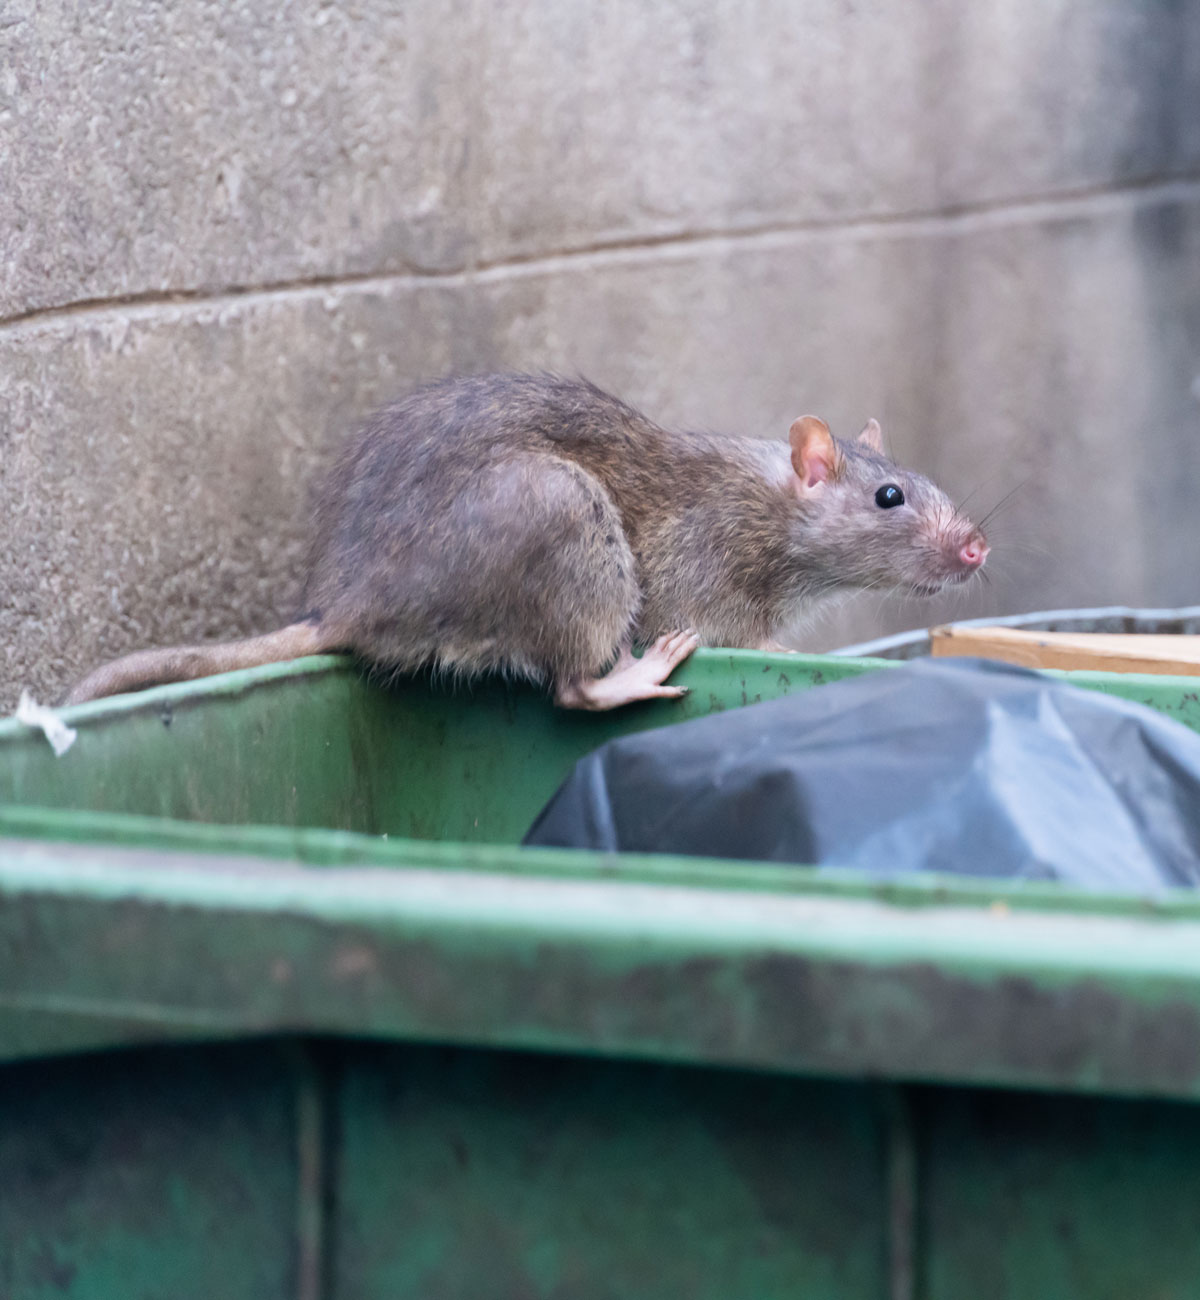 Rat on a green bin in the UK